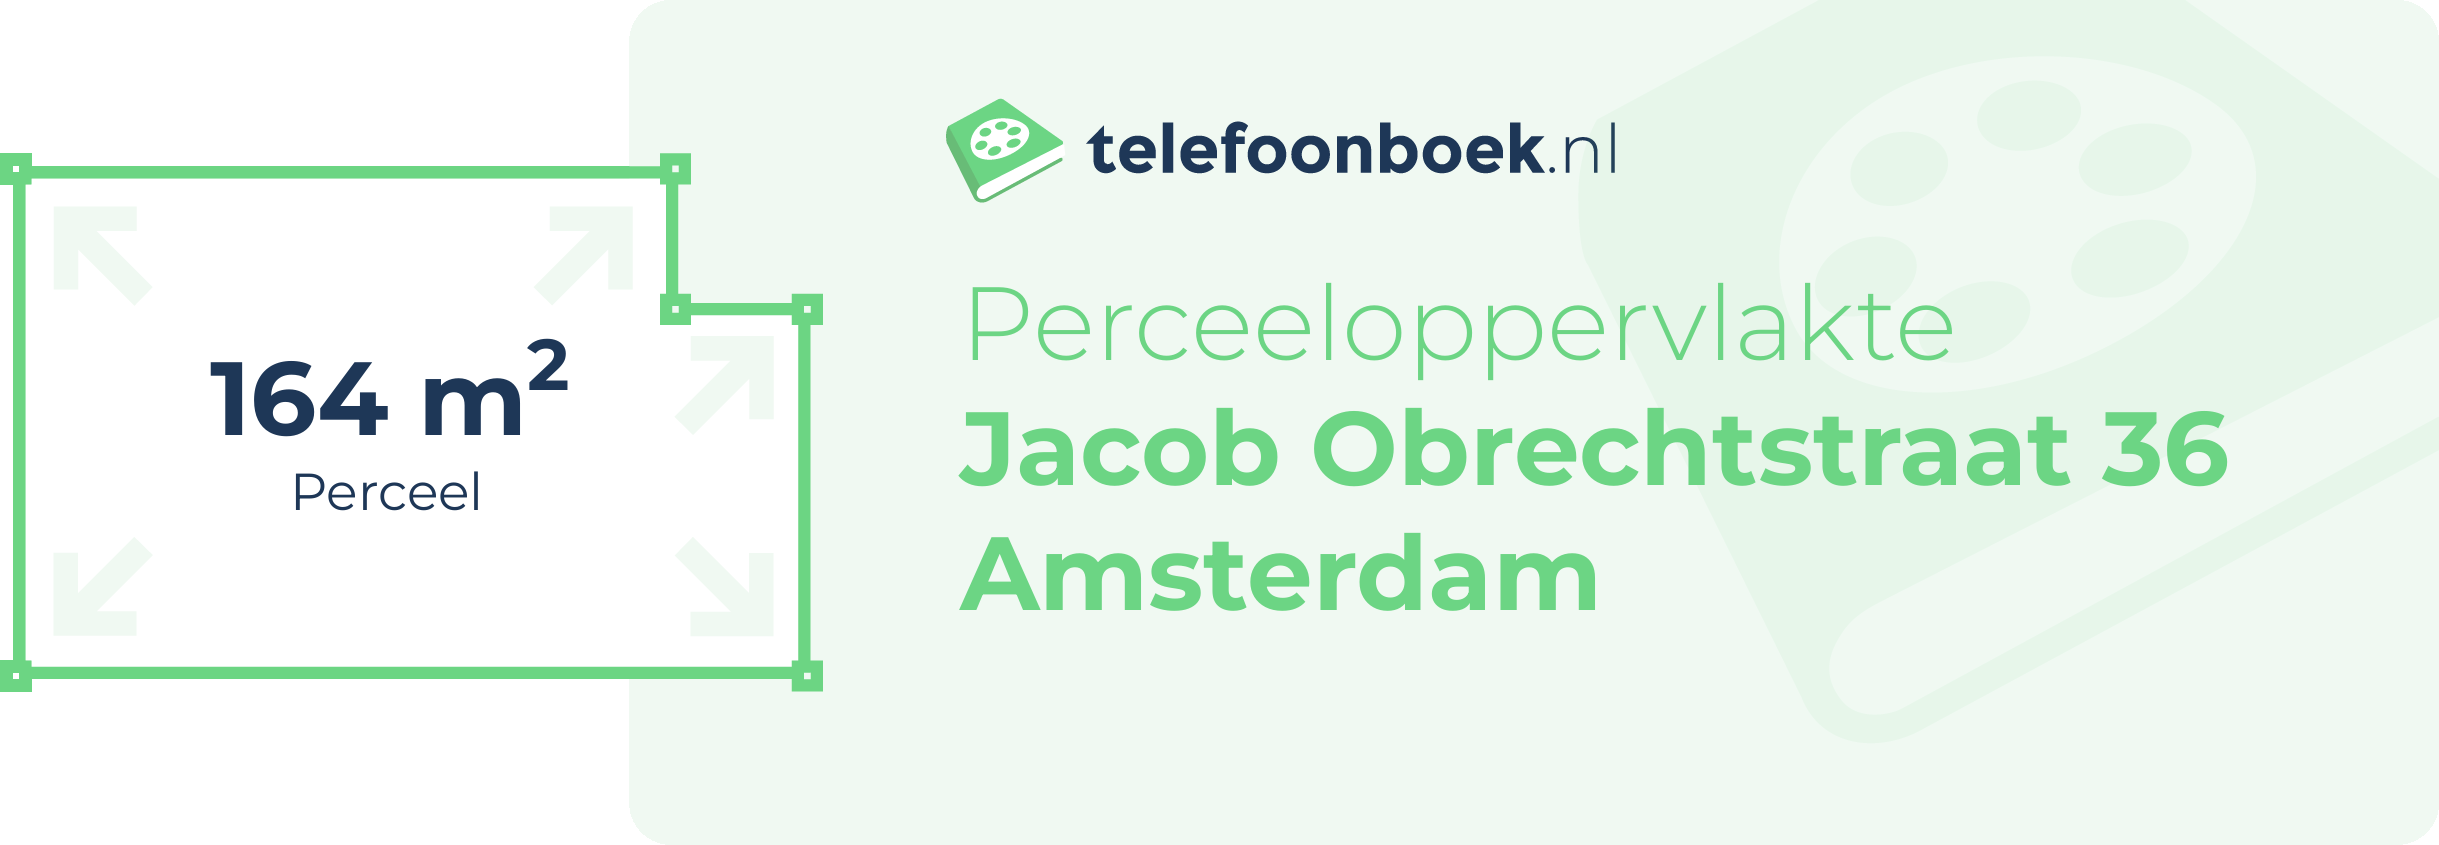 Perceeloppervlakte Jacob Obrechtstraat 36 Amsterdam